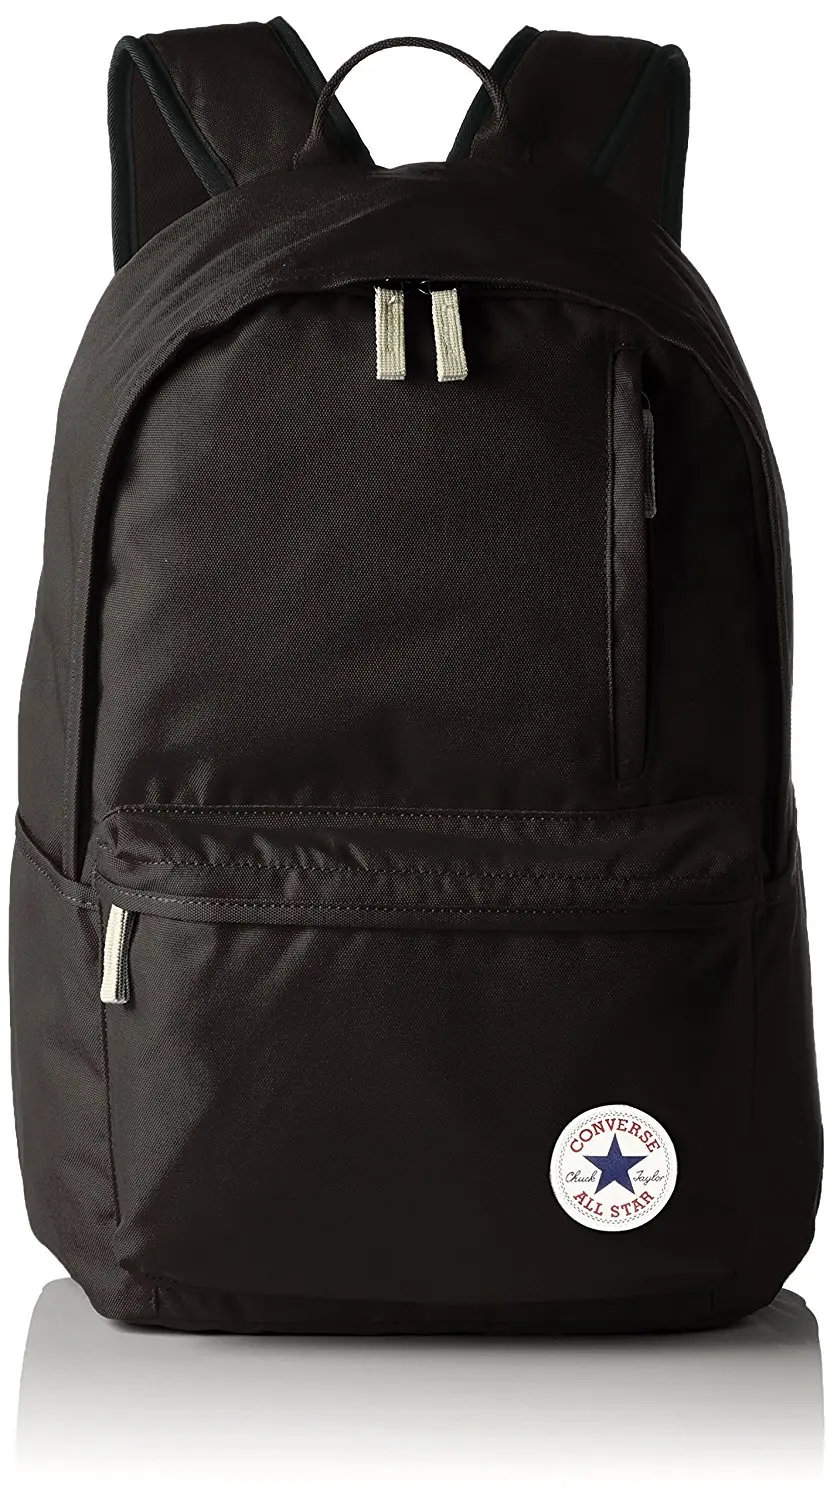 buy converse backpack